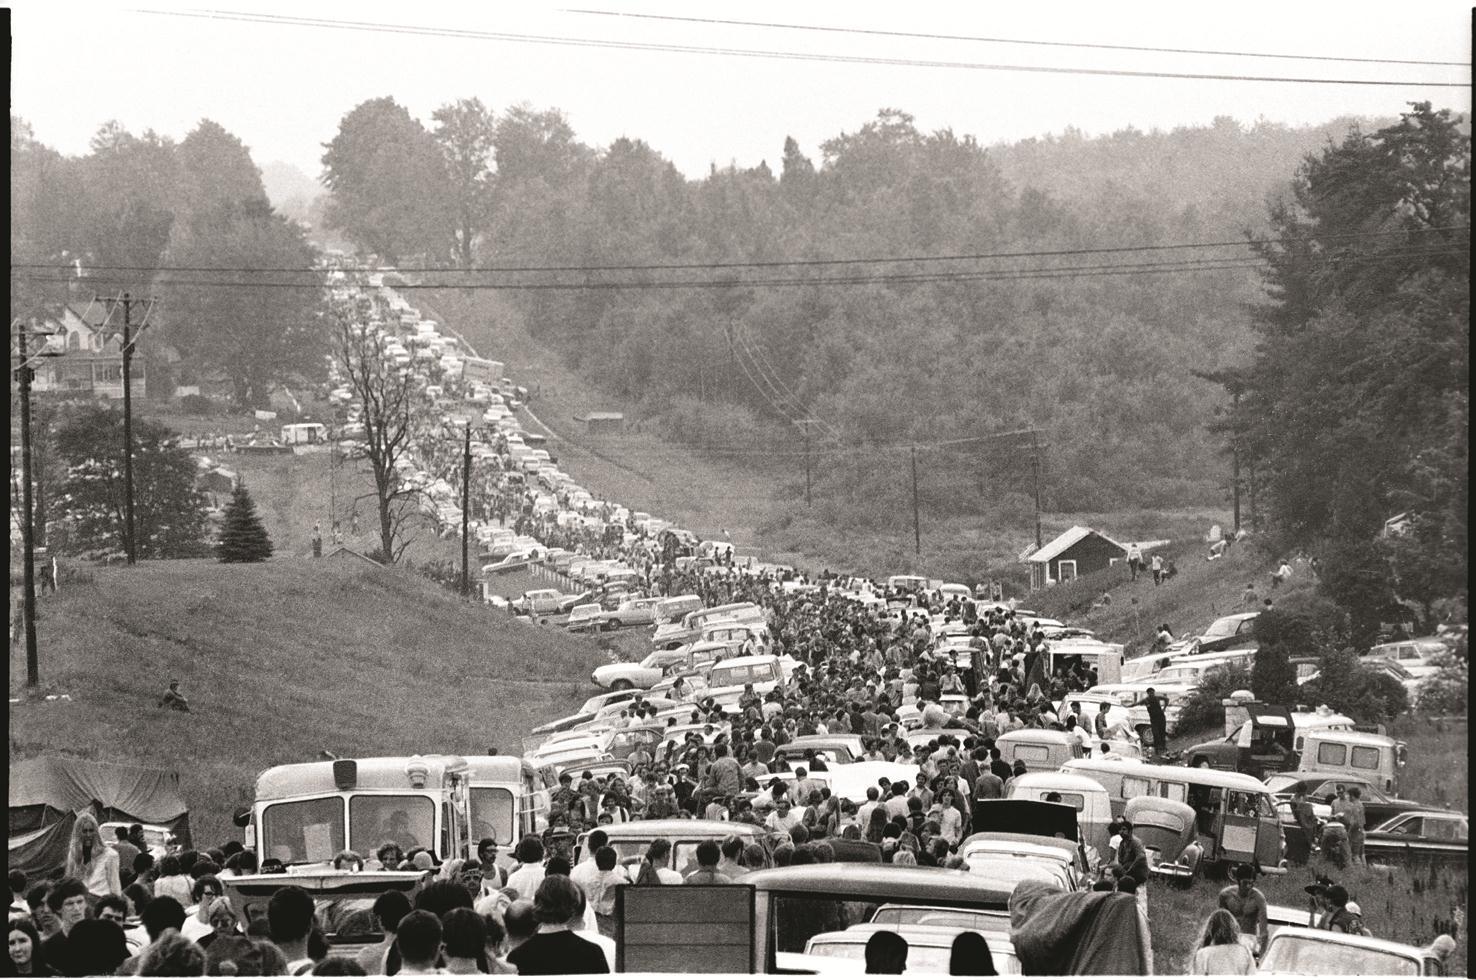 Ken Regan Black and White Photograph - Woodstock, Bethel, NY, 1969